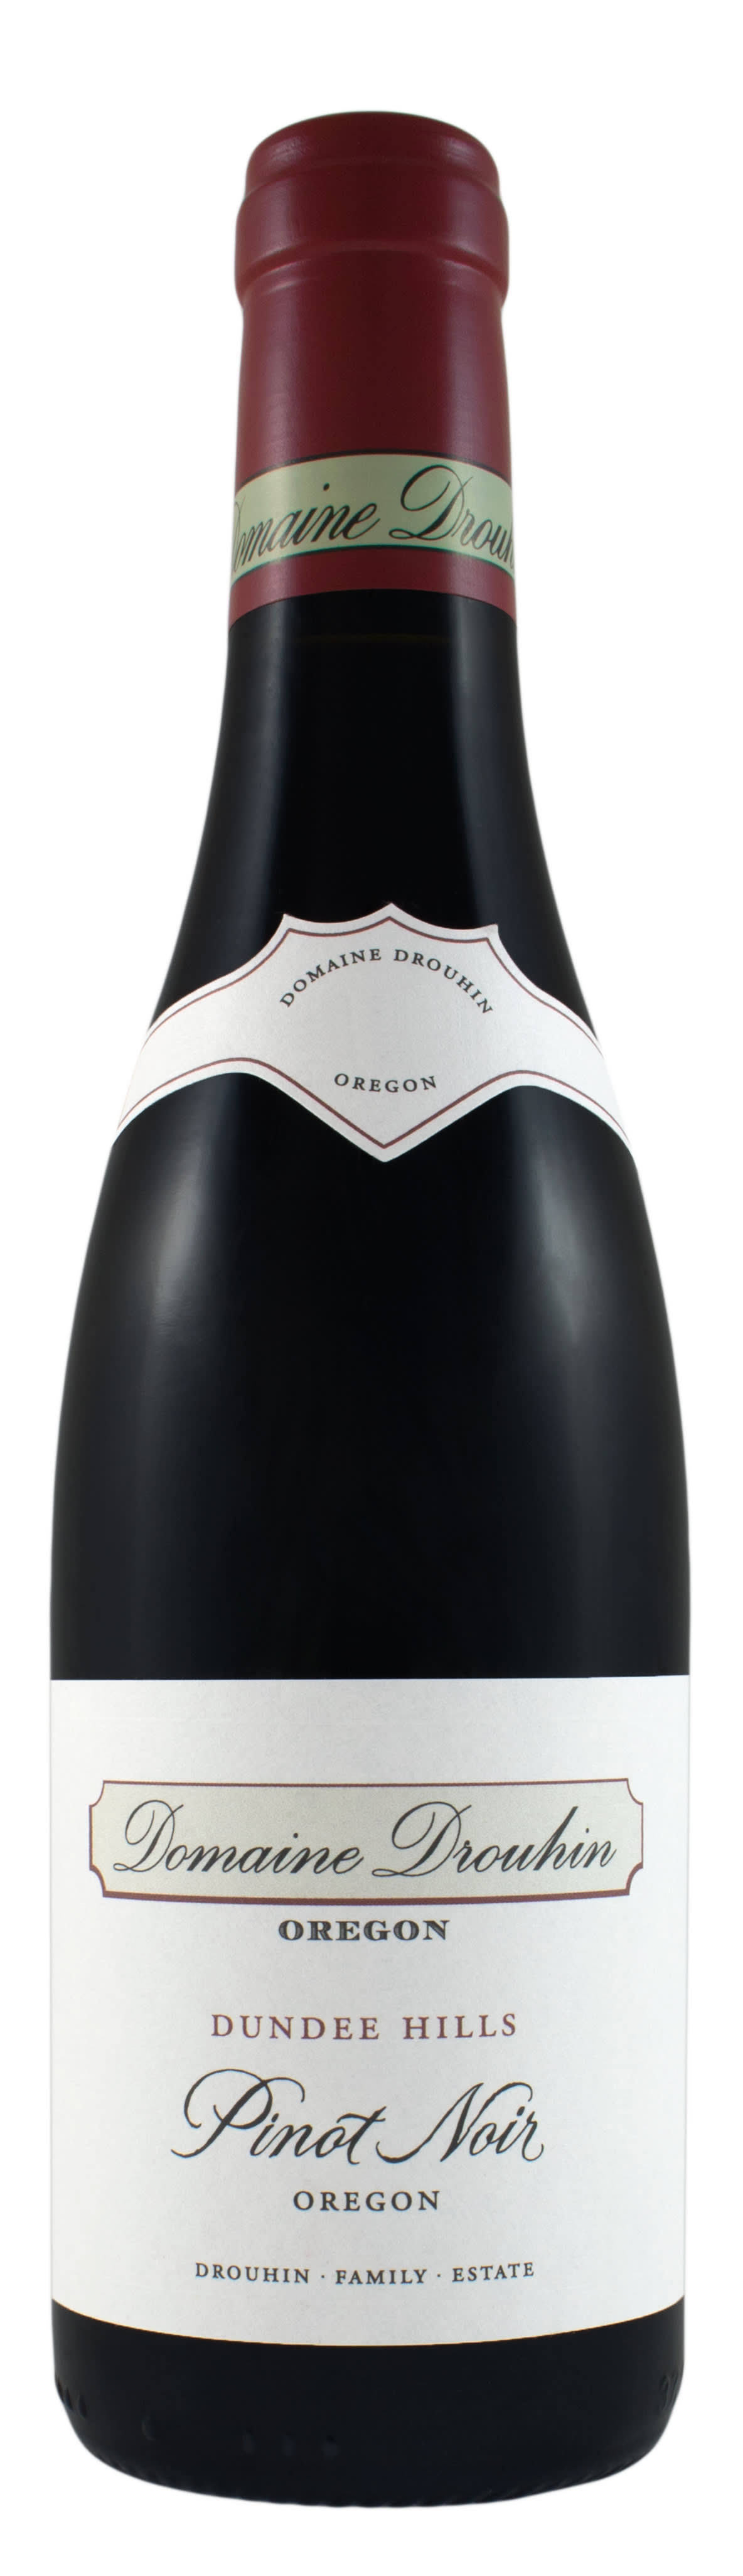 Domaine Drouhin Oregon Dundee Hills Pinot Noir - 750ml